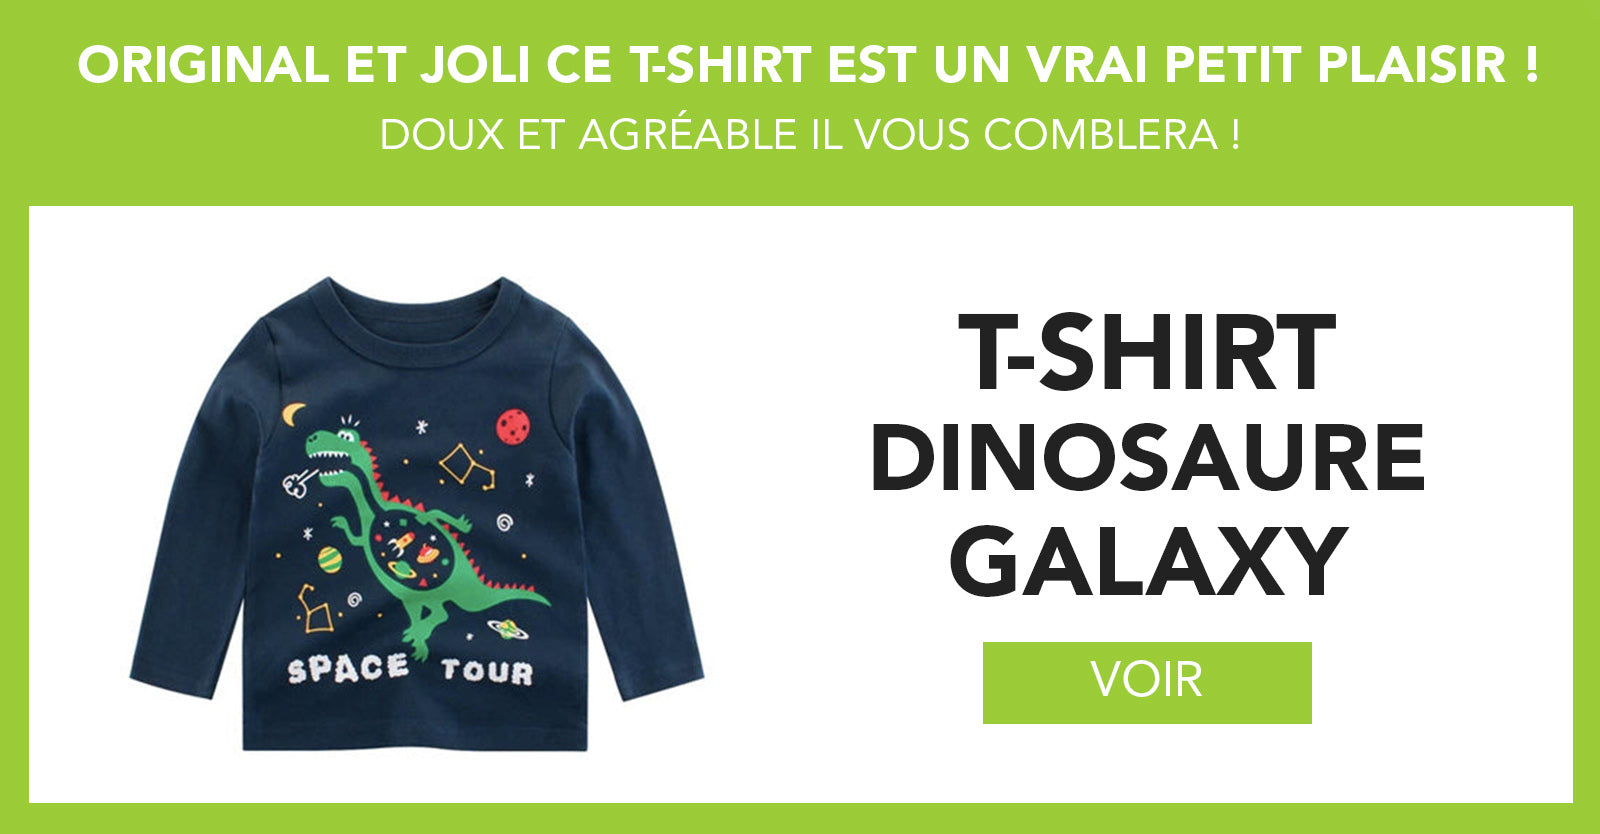 T-shirt dinosaure espace